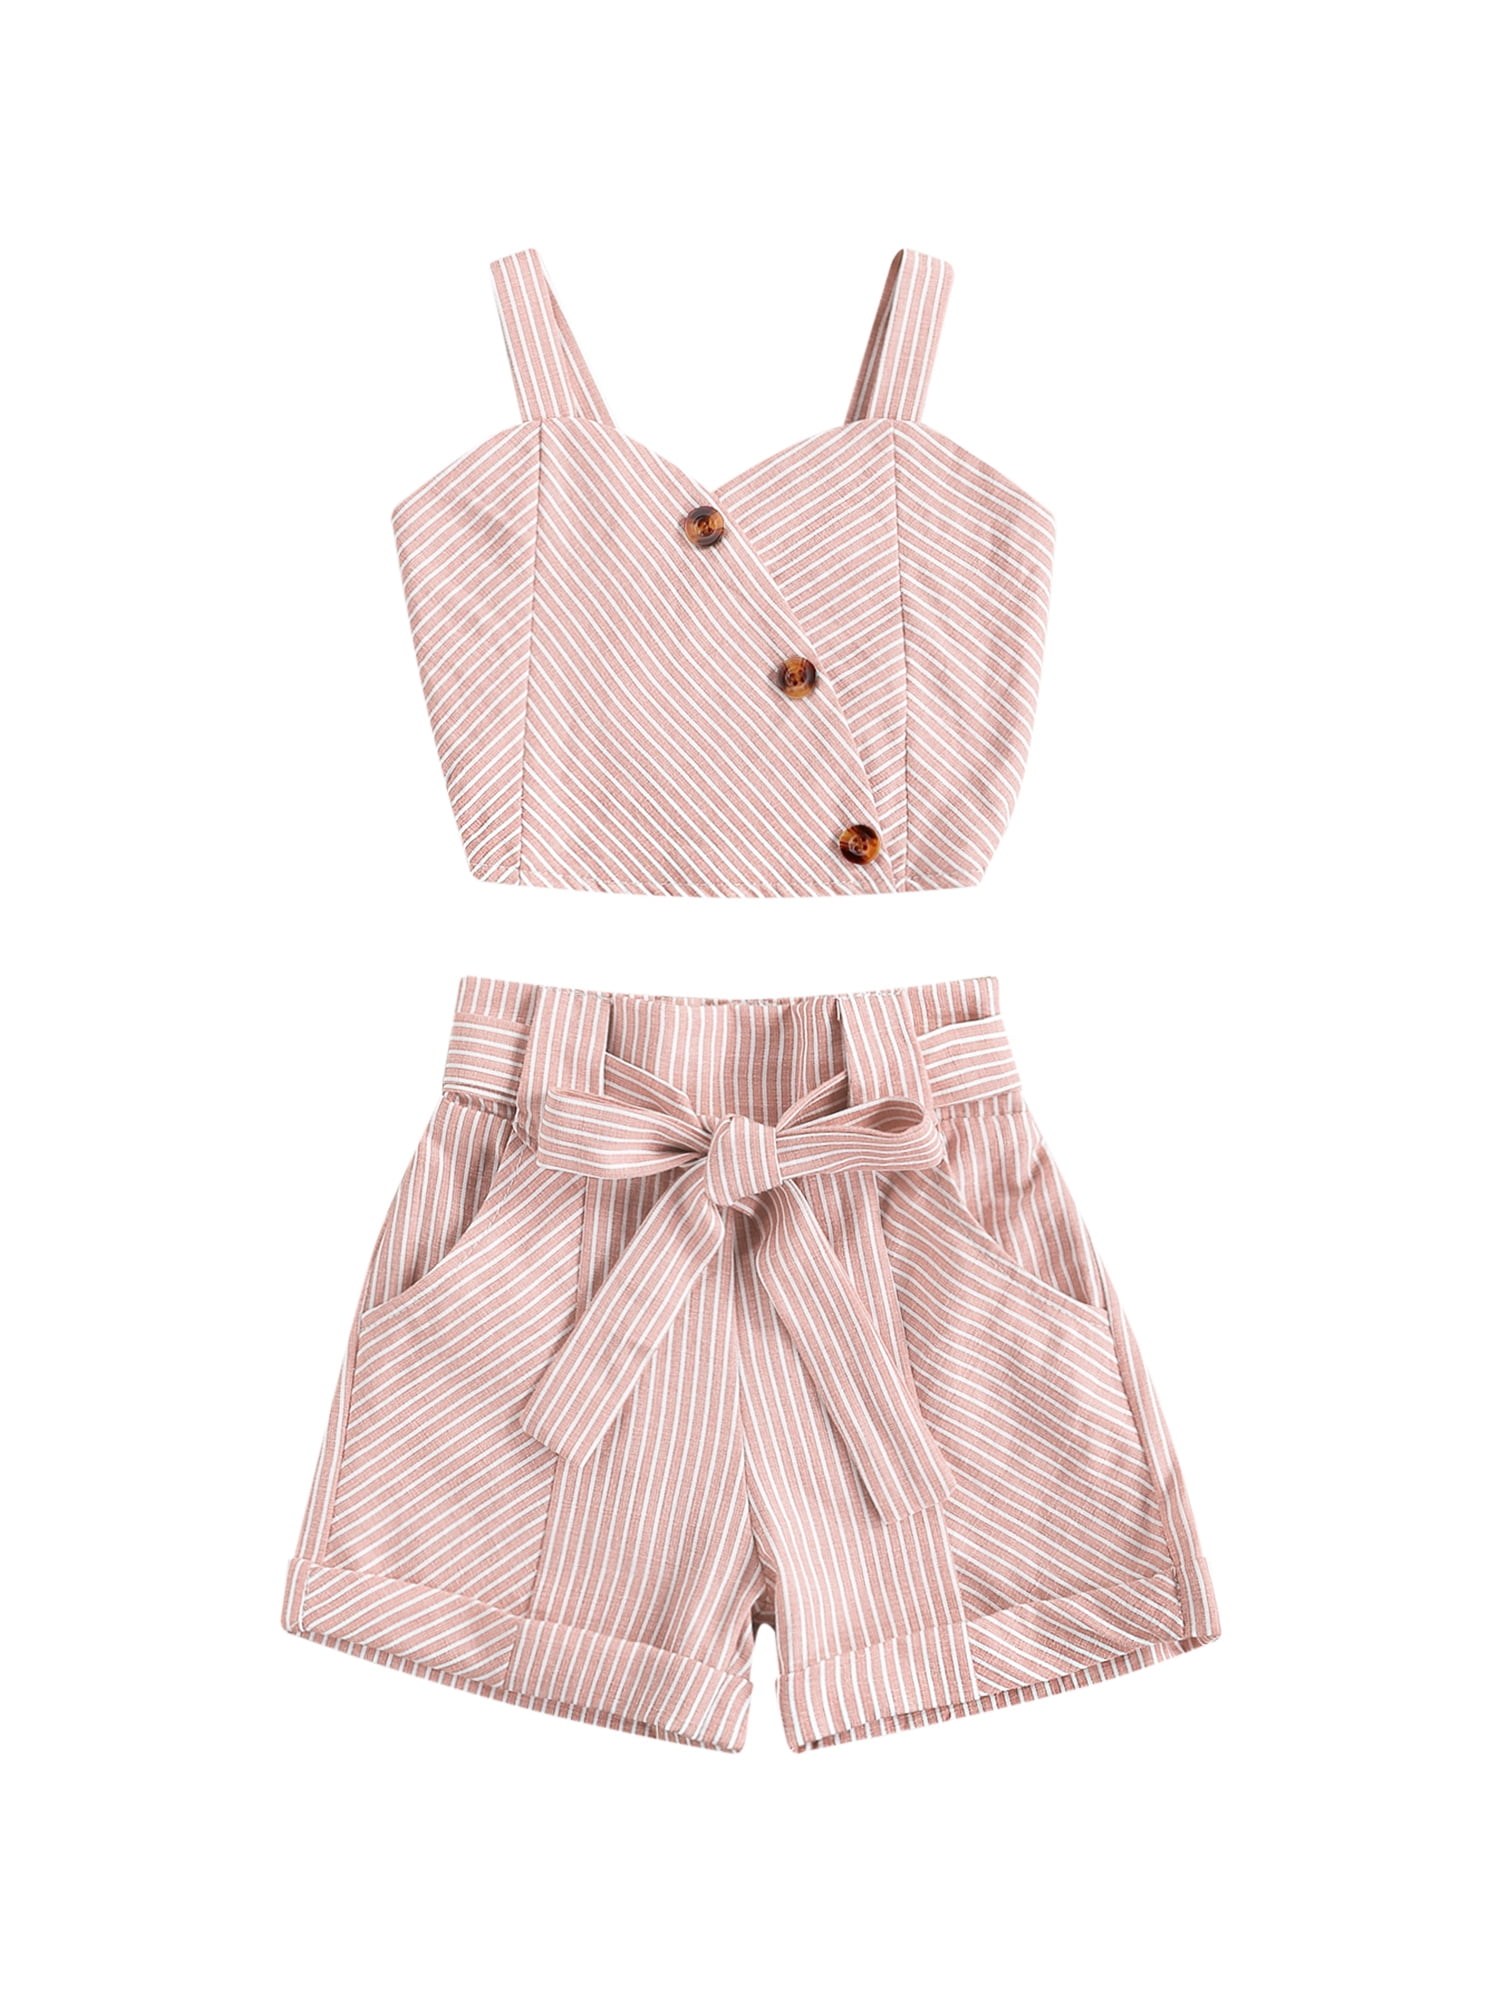 Baby Girls Summer Clothes Polka Dot Printed Sleeveless Tops with Big  Bow+Pure Color Shorts Outfits | Wish | Toddler girl outfits, Kids outfits,  Kids outfits girls